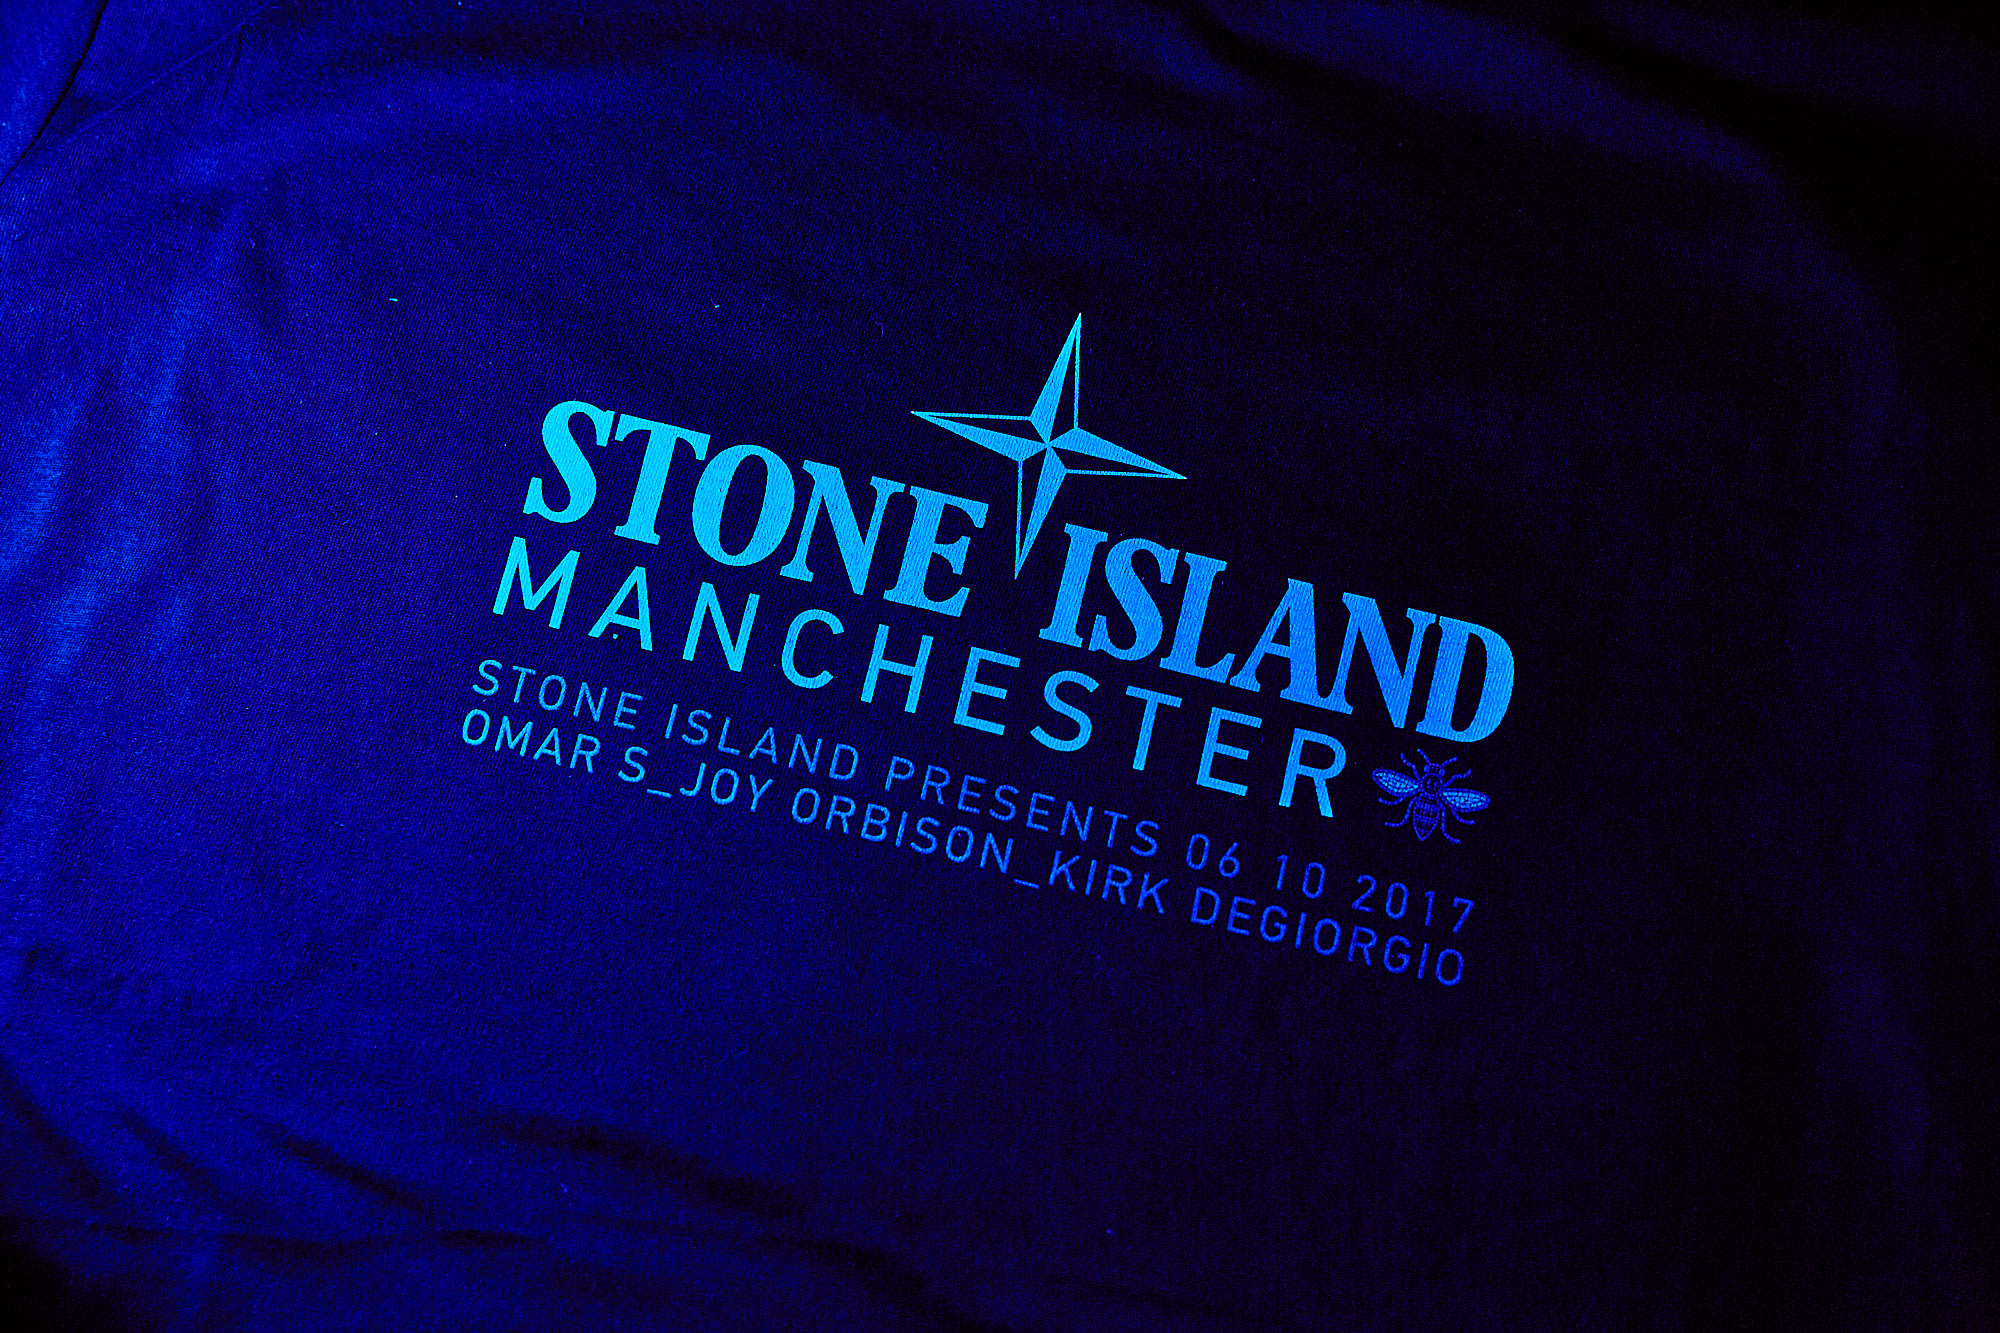 stoneisland-manchester-4